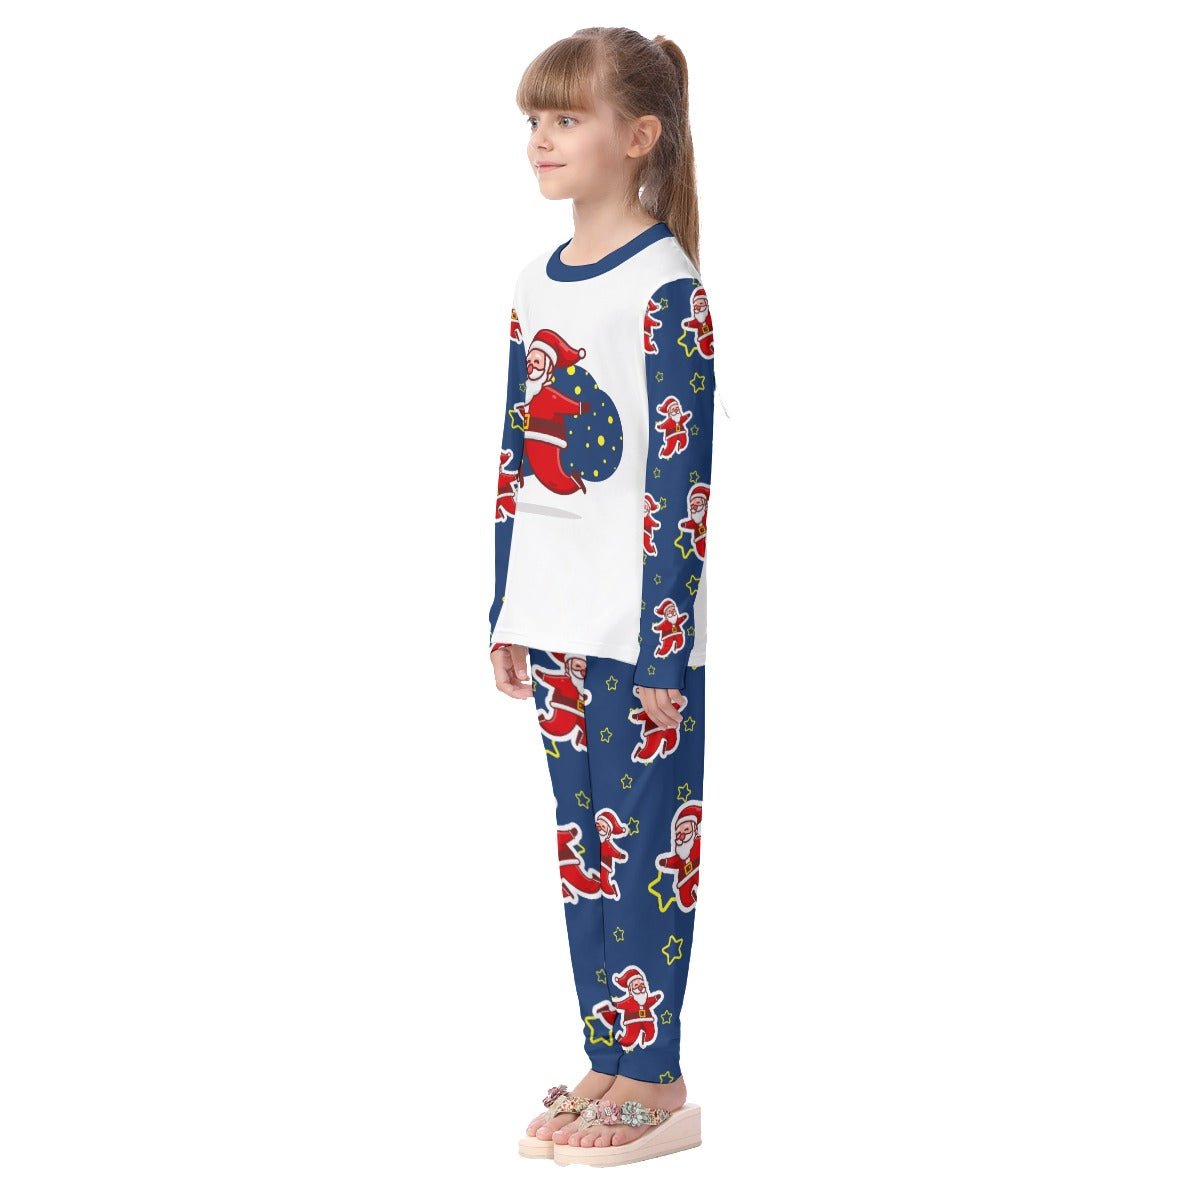 Kids Christmas Pyjama Set - Santa Night Time - Festive Style